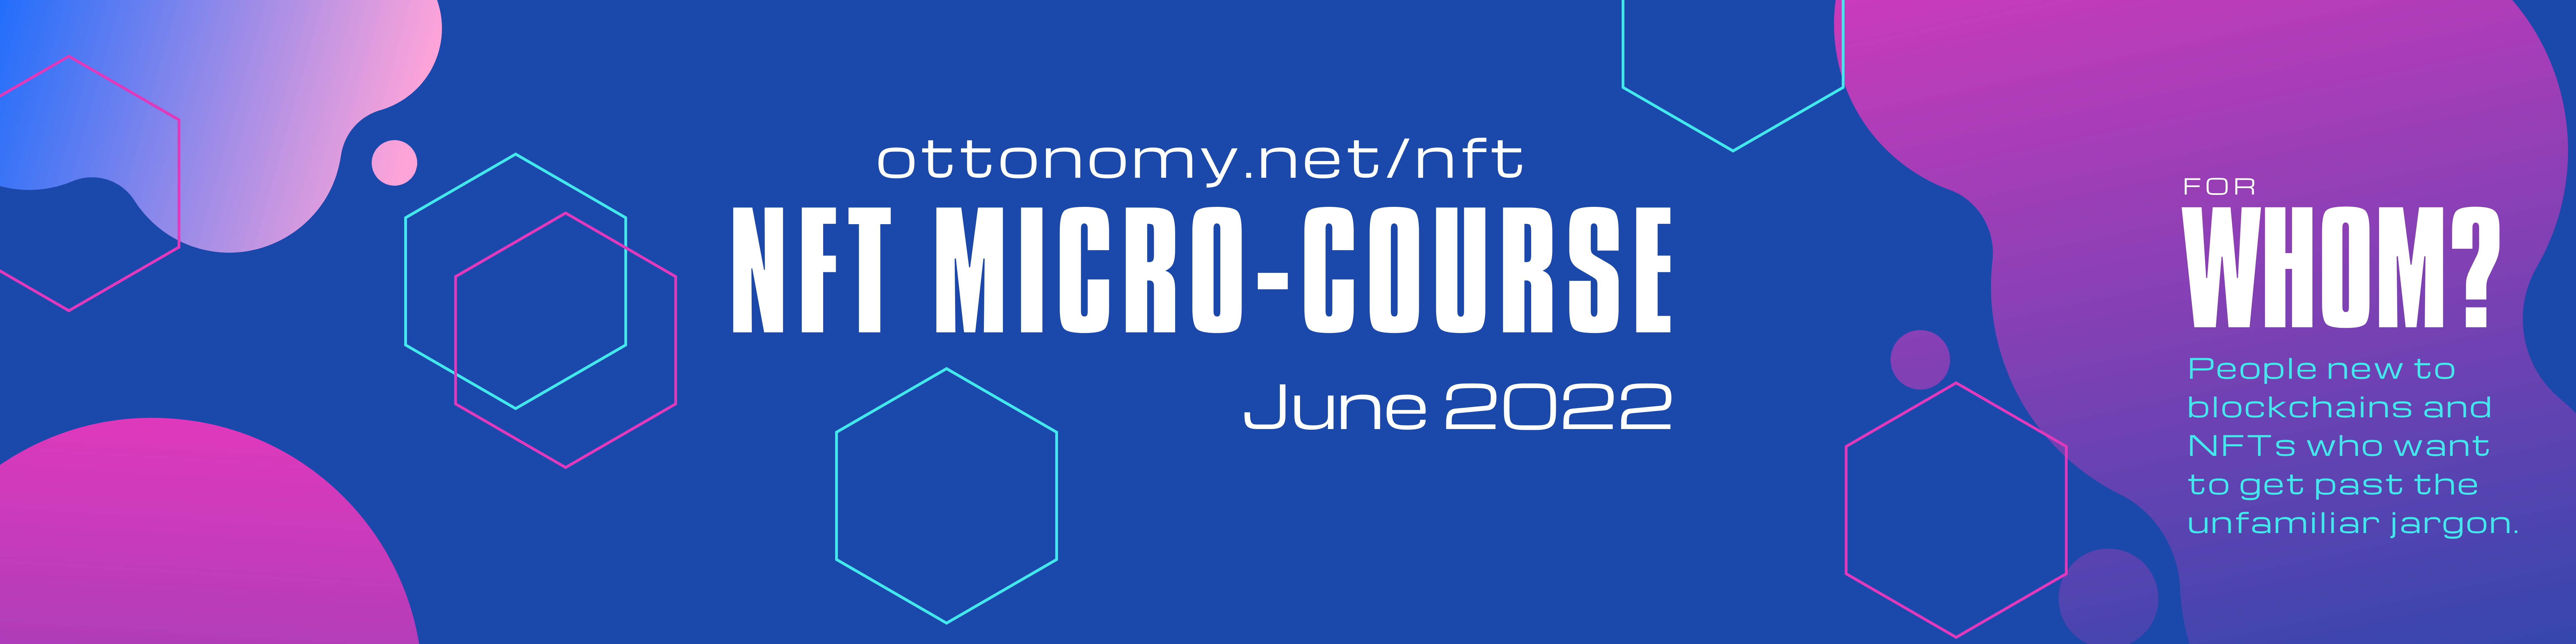 NFT Introduction Micro-course June 2022